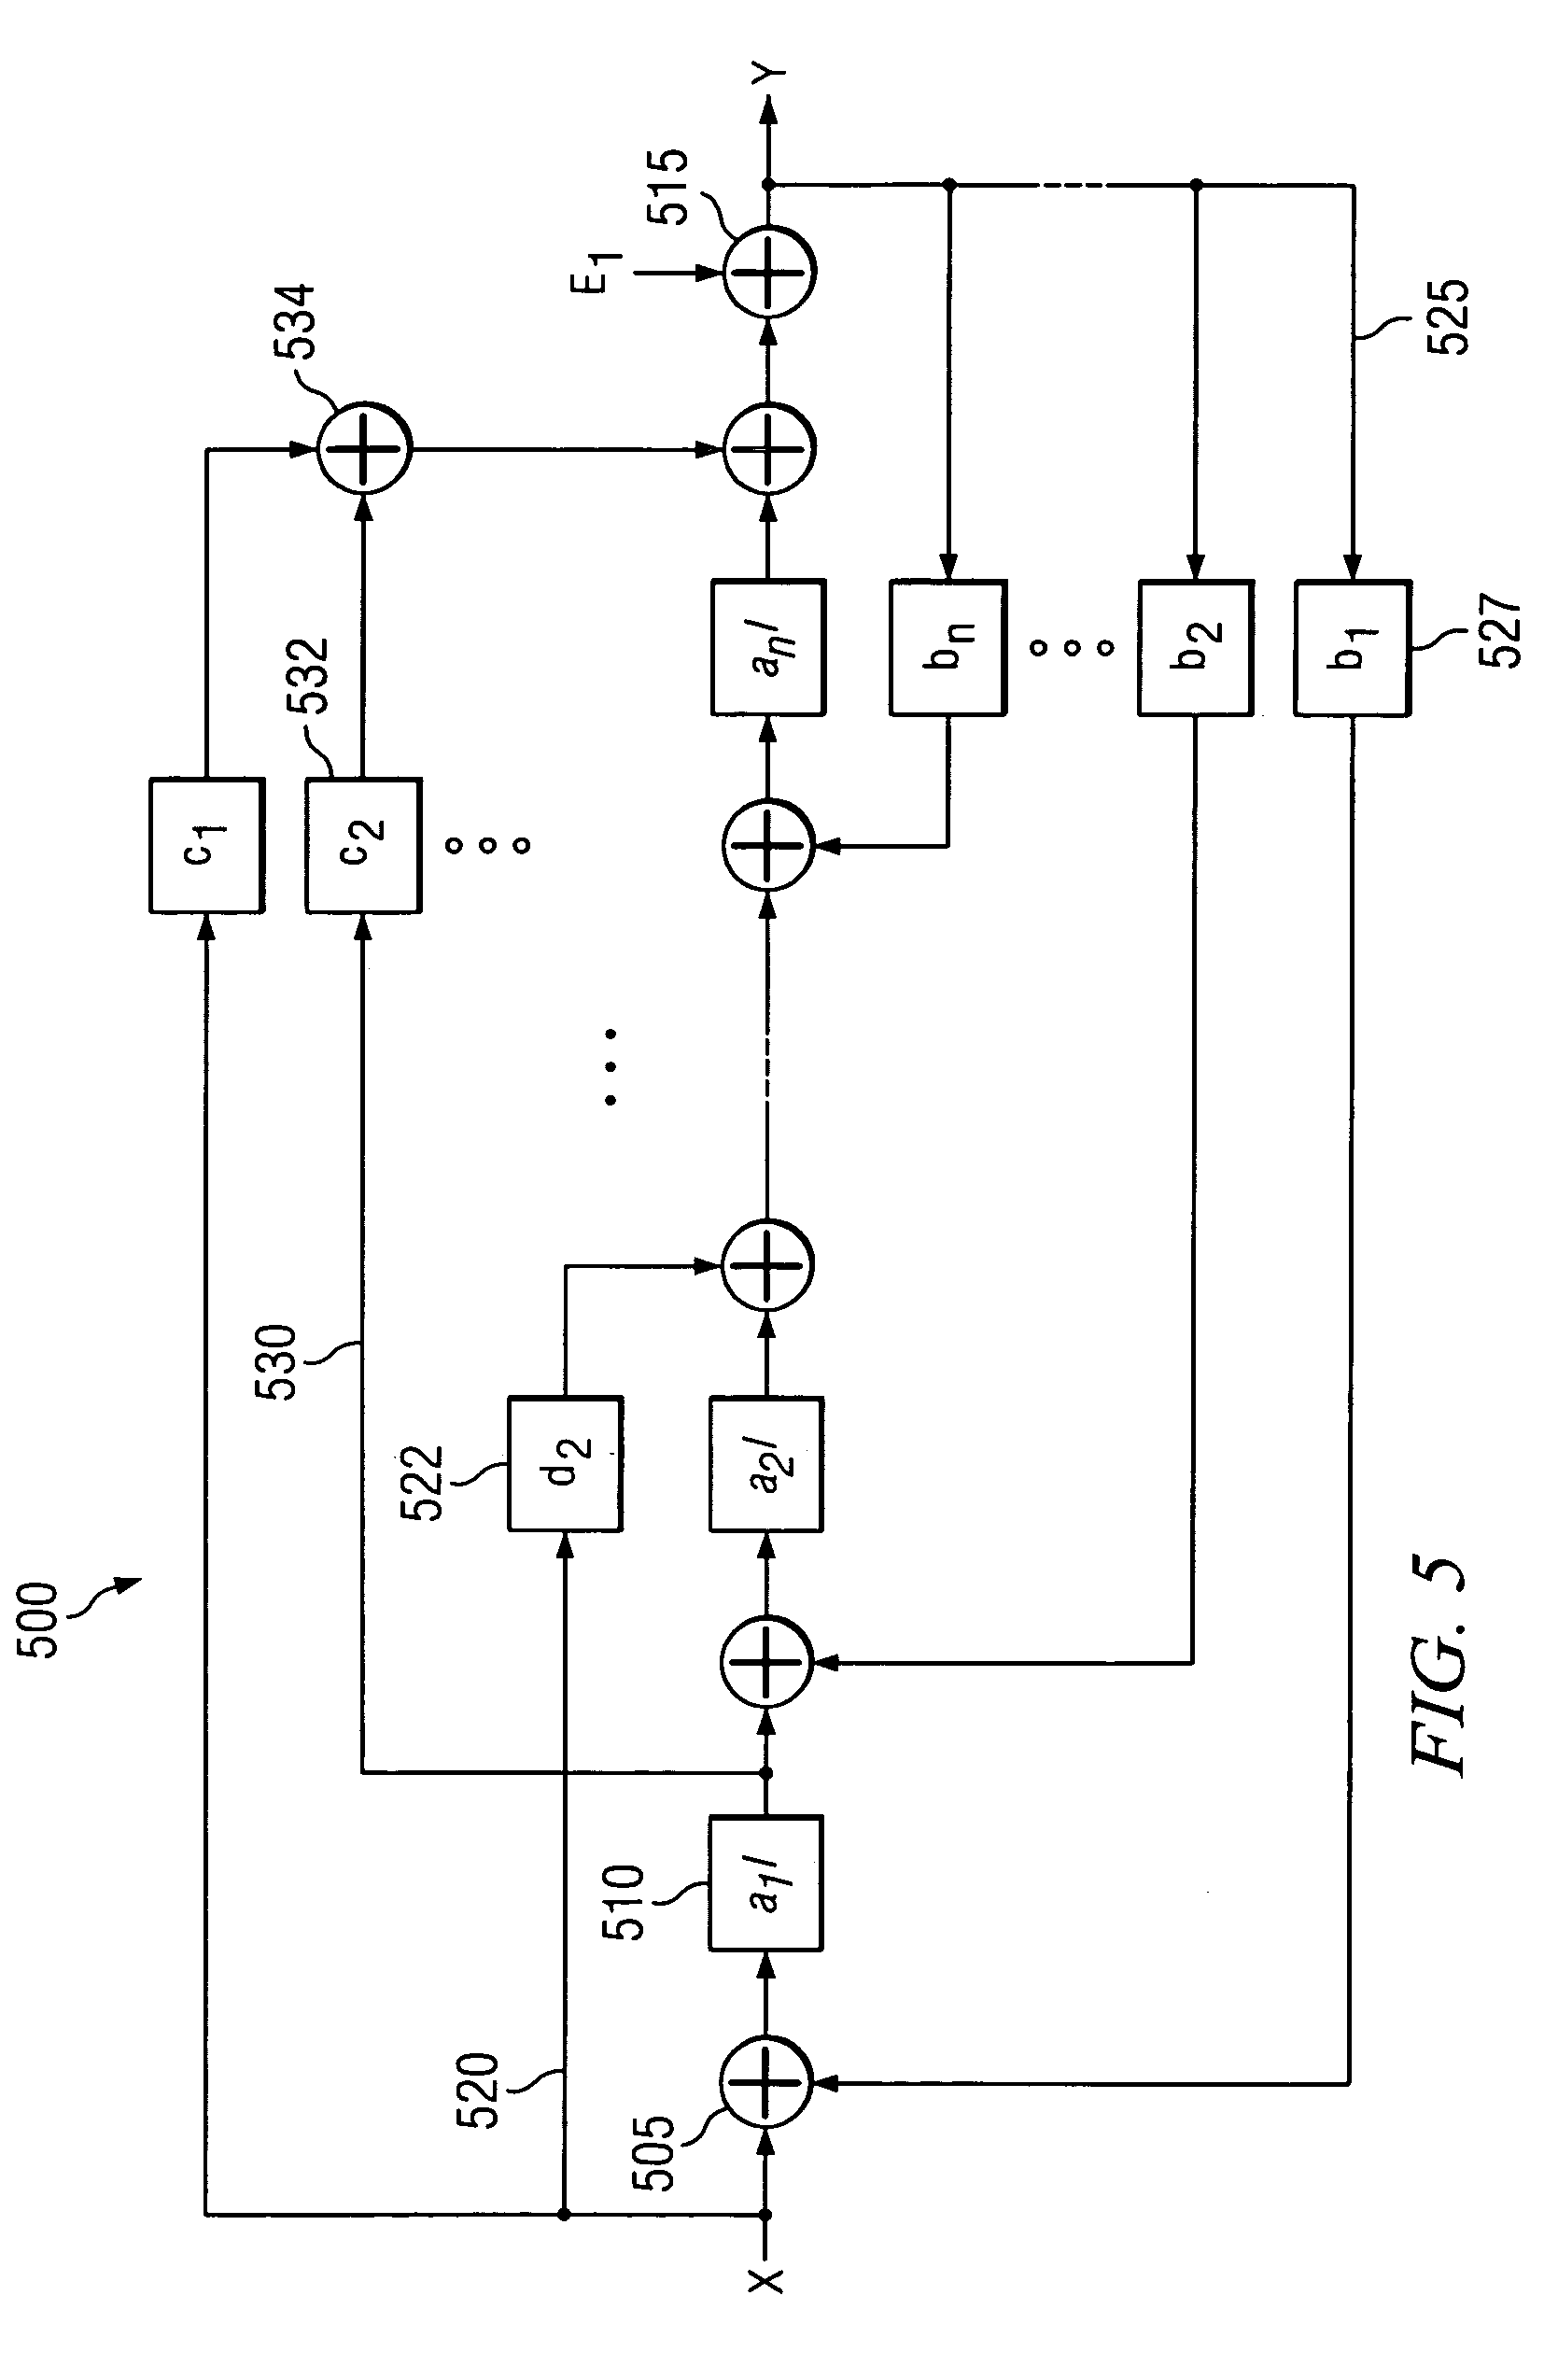 Sigma-delta analog-to-digital converter (ADC) with truncation error cancellation in a multi-bit feedback digital-to-analog converter (DAC)